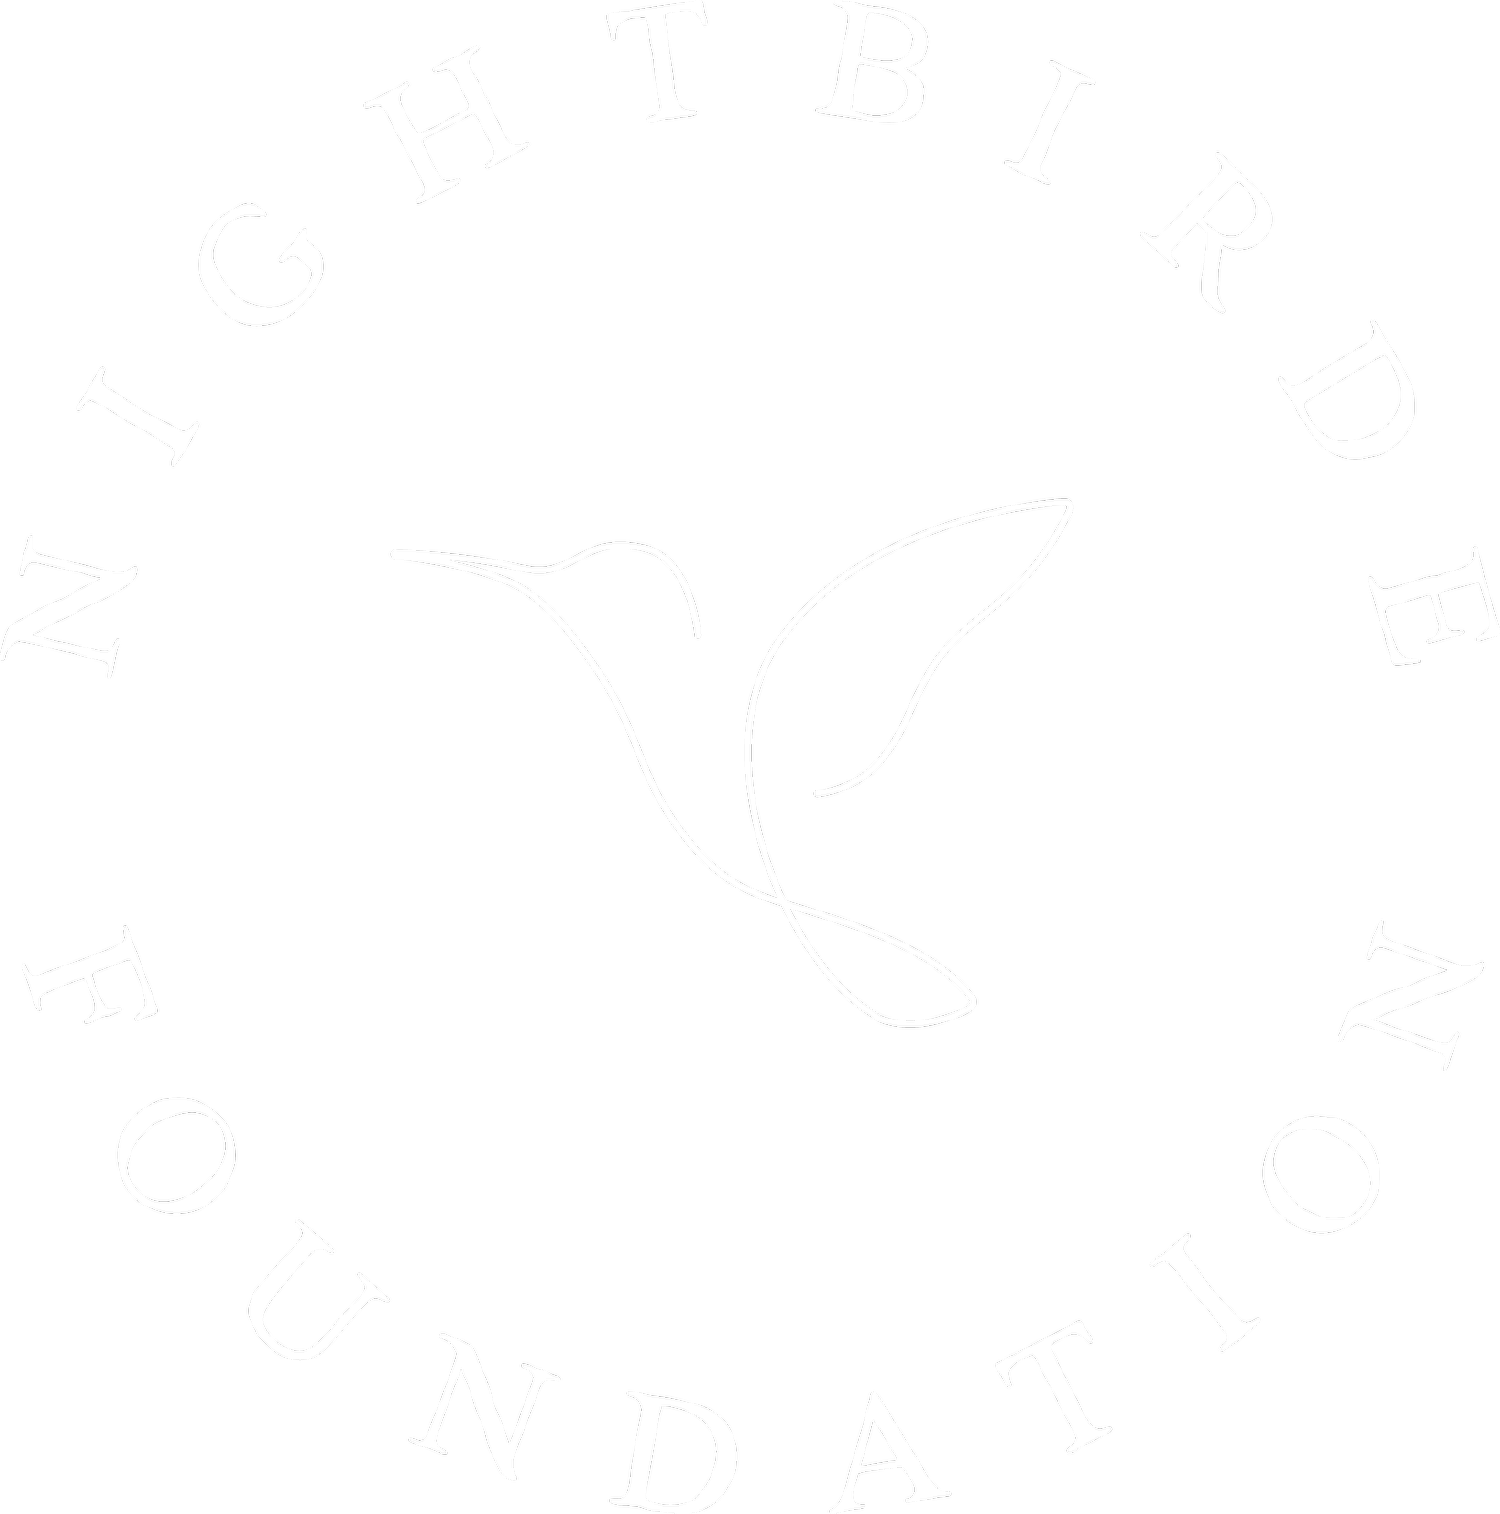 The Nightbirde Foundation